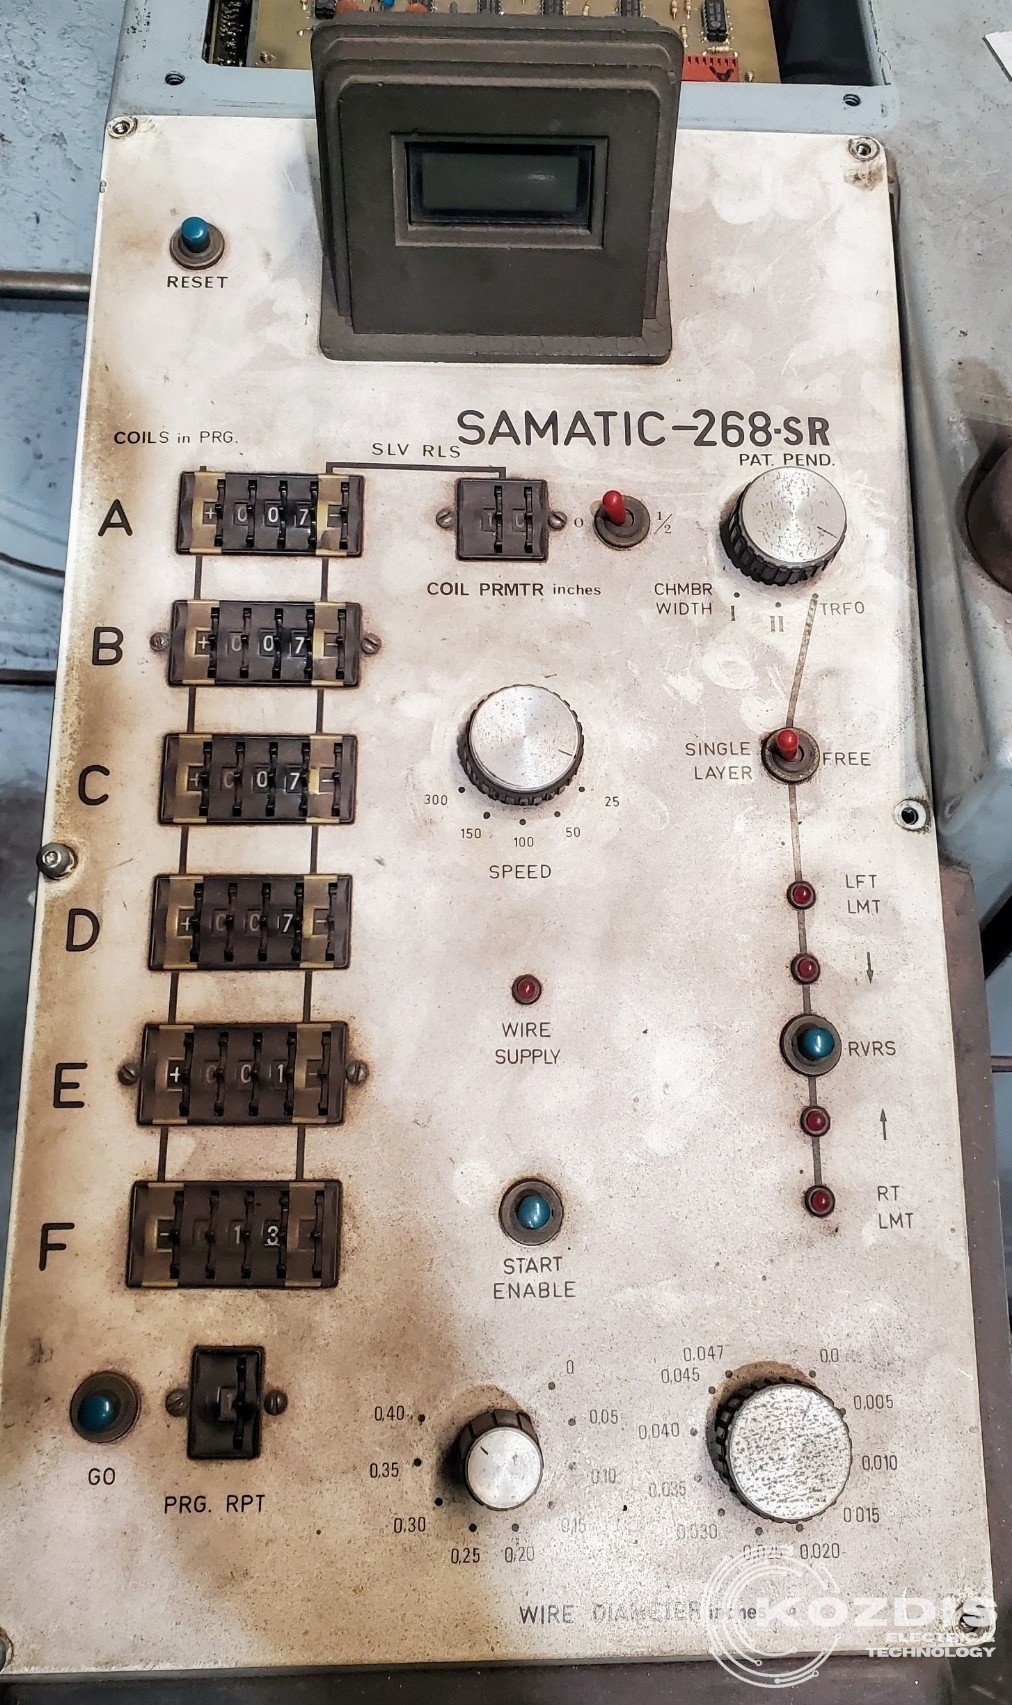 SAMATIC-286-SR